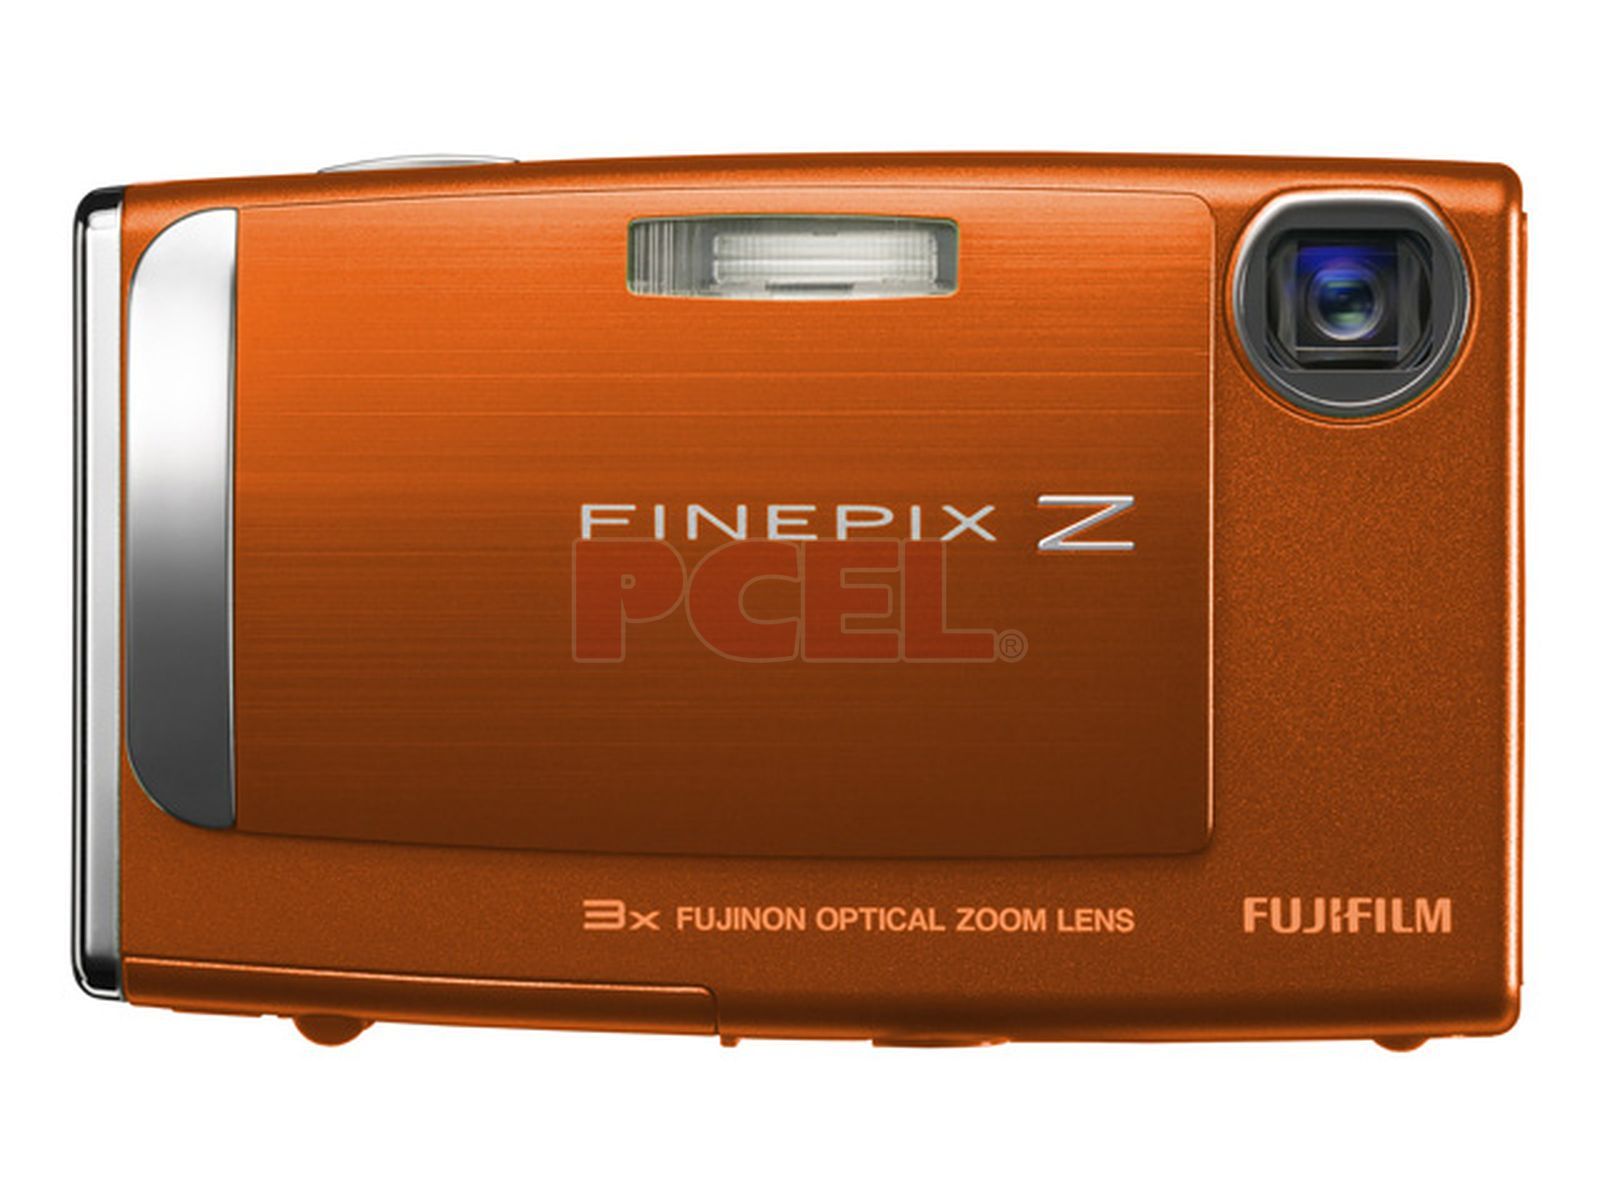 Fotográfica Digital Fujifilm Z10fd, 7.2MP. Color Naranja